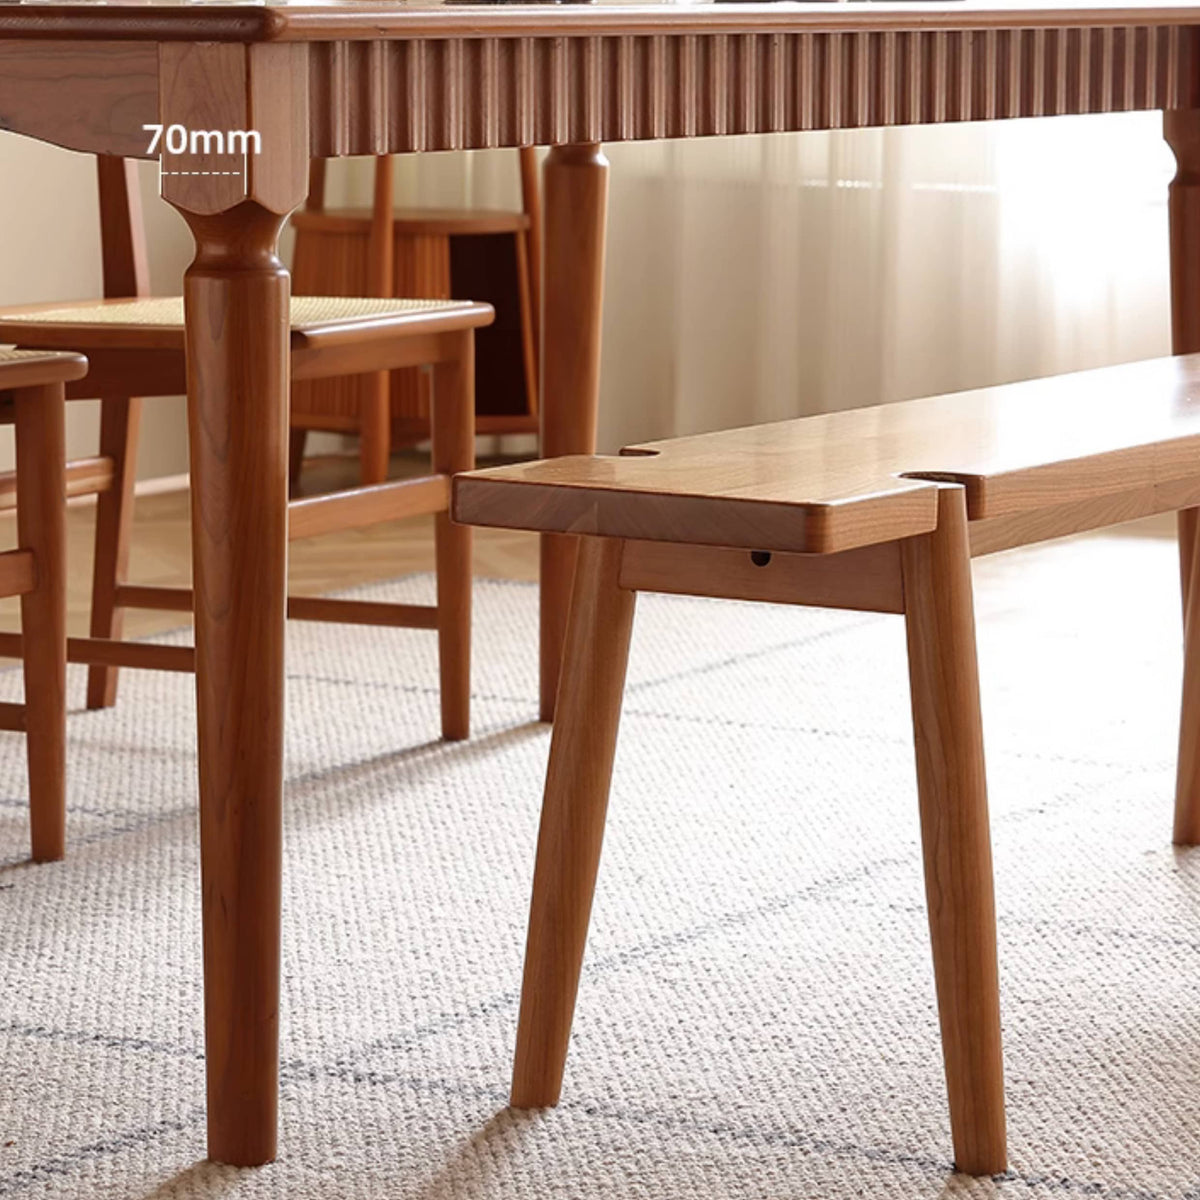 Elegant Natural Cherry Wood Table - Timeless Design & High-Quality Craftsmanship Hersa-1620